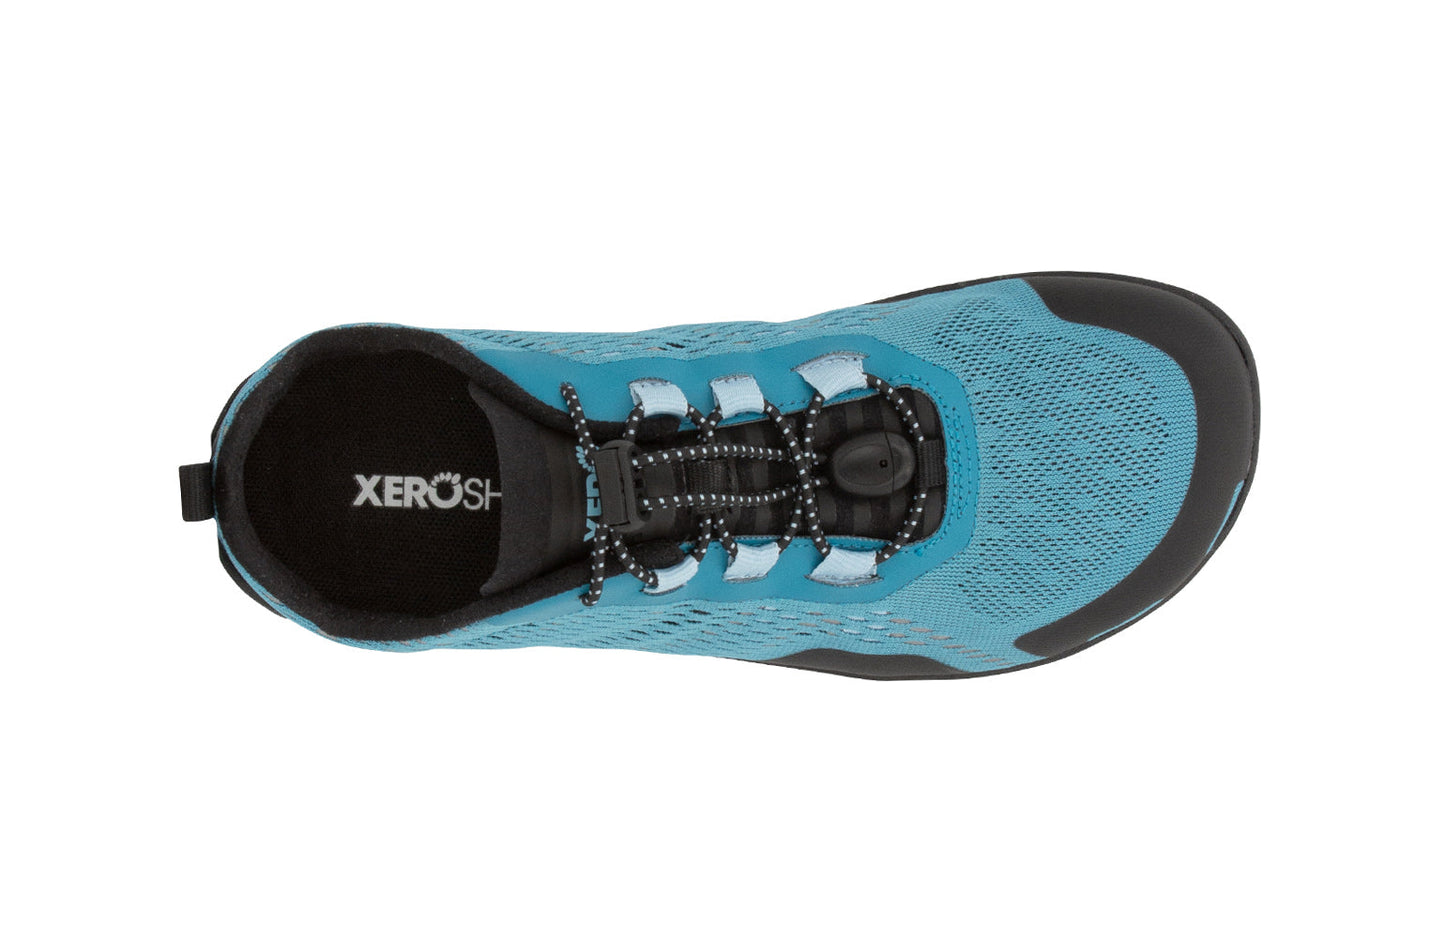 Xero Shoes Aqua X Sport Women barfods vandsko til kvinder i farven surf, top